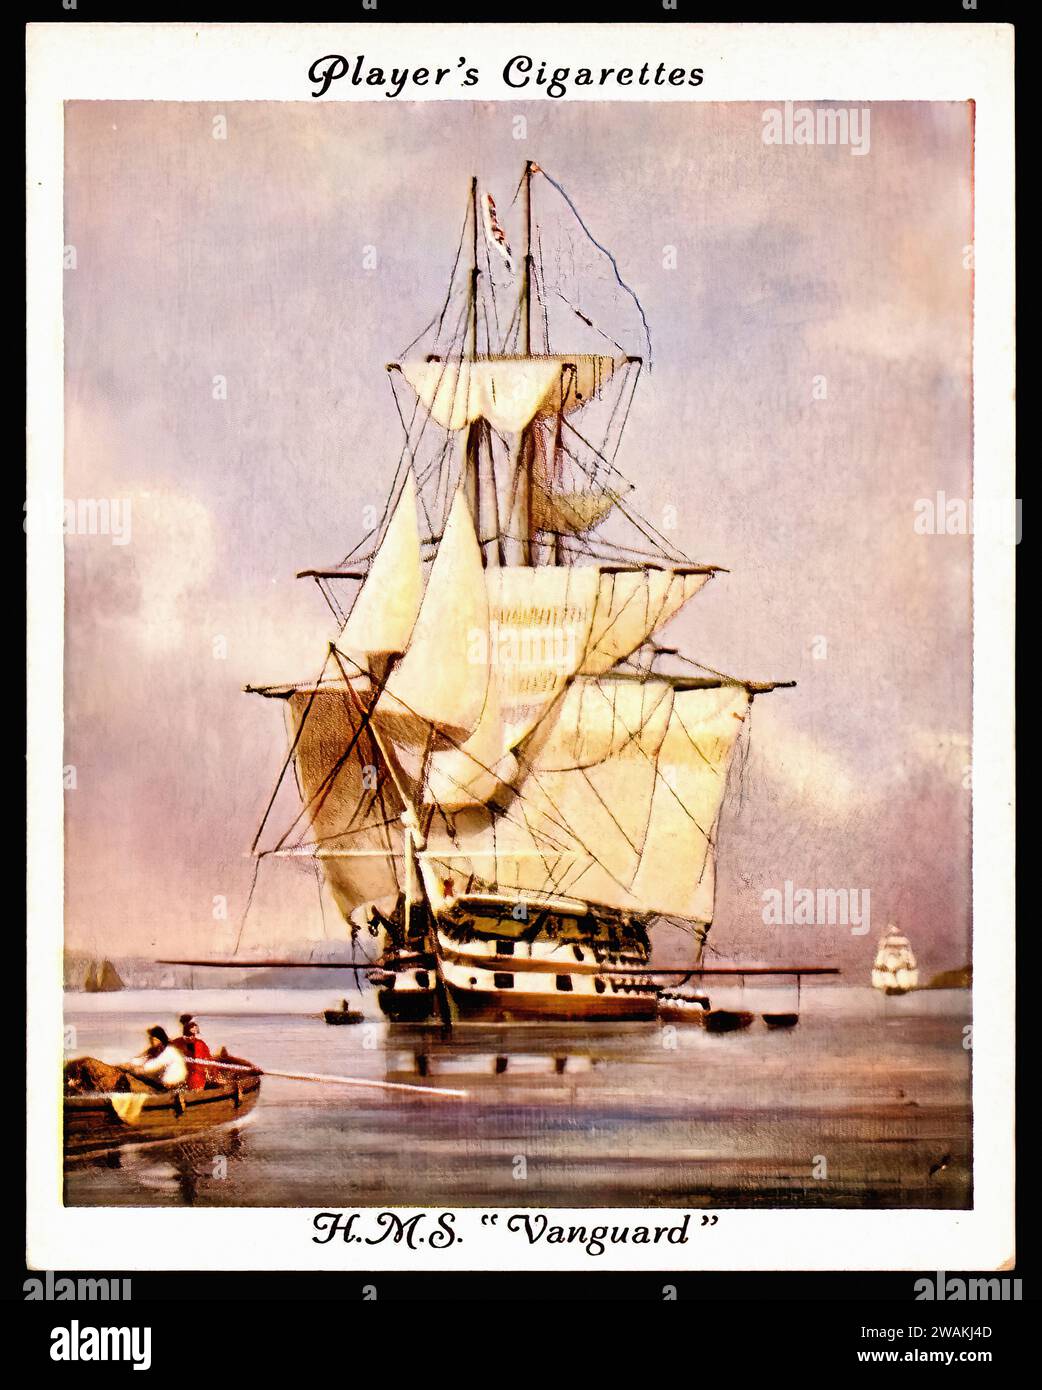 HMS Vanguard - Vintage Cigarette Card Illustration Stock Photo